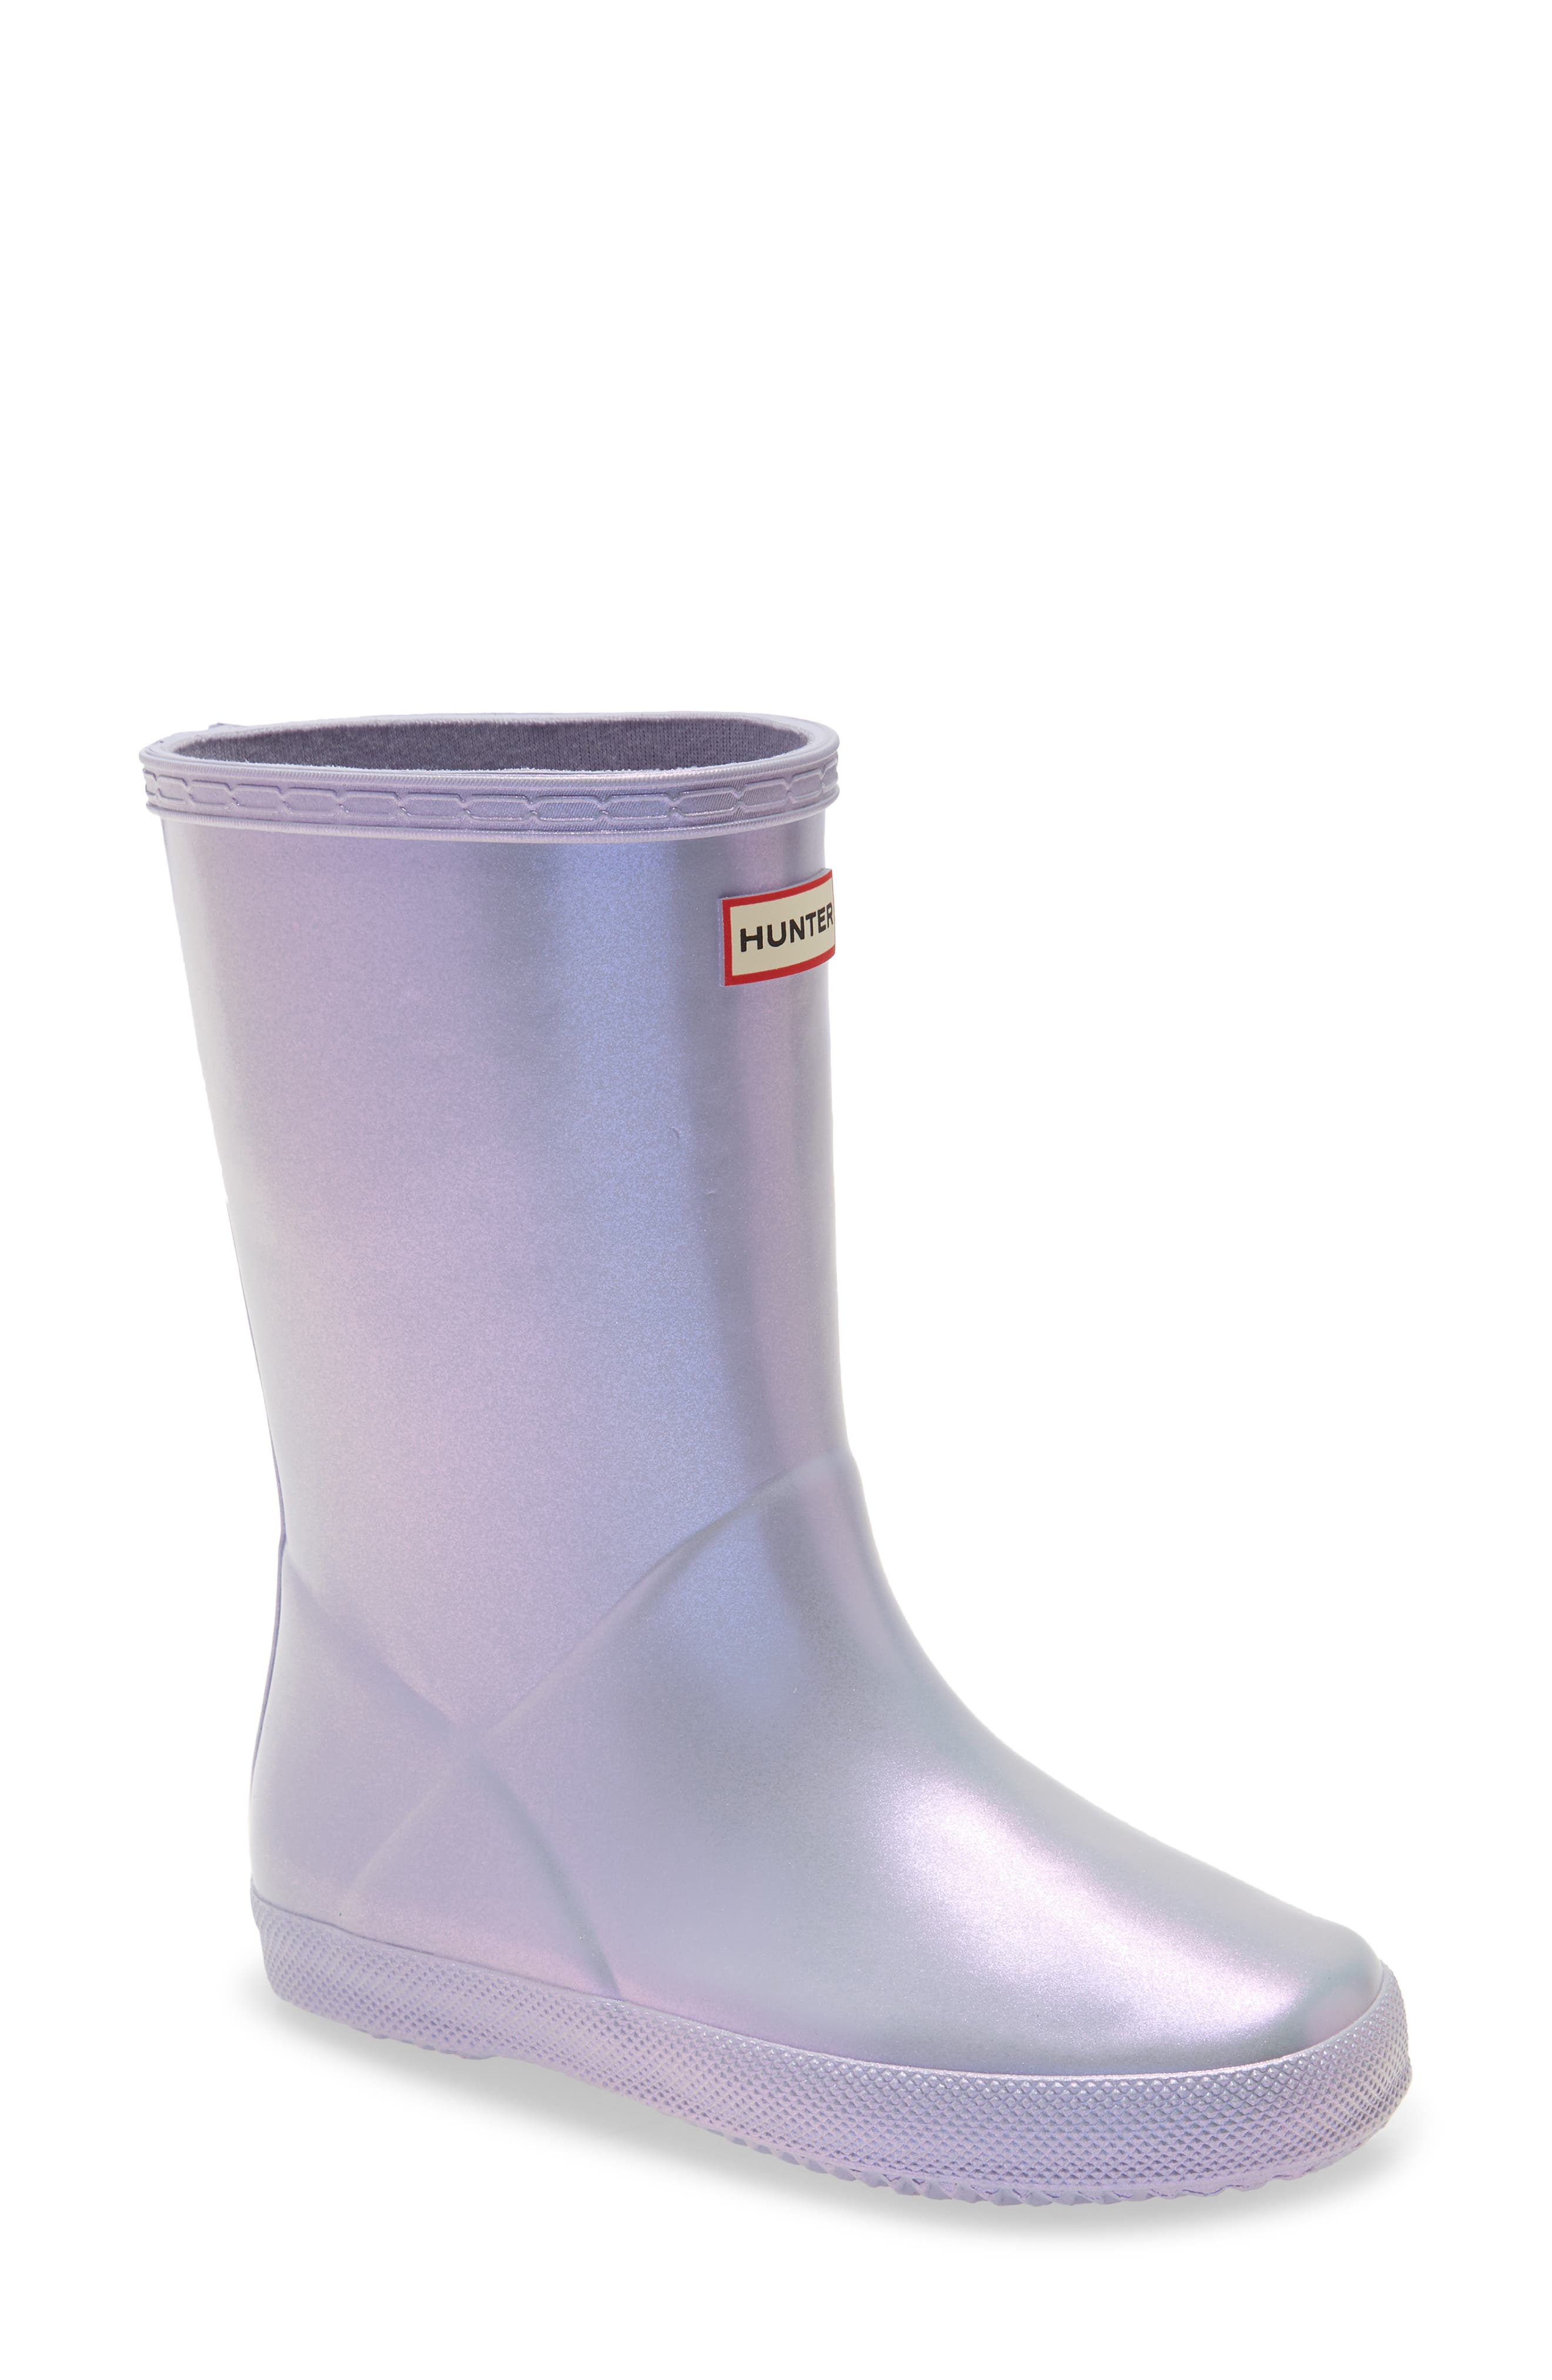 Buy > purple girl boots > in stock